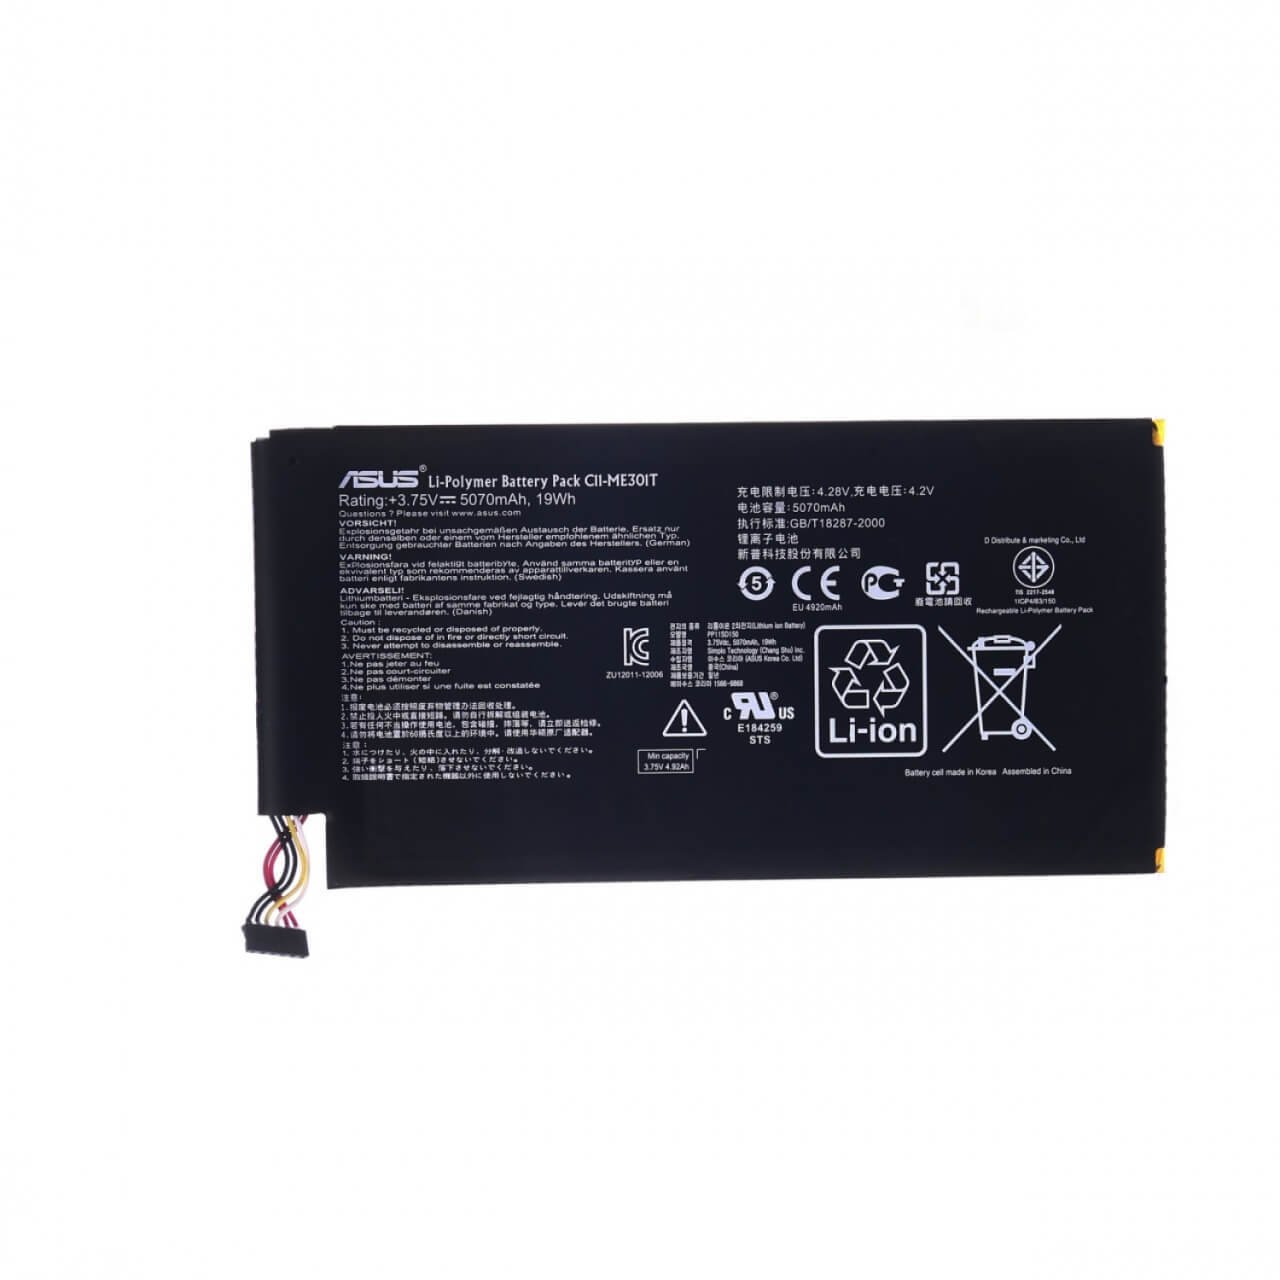 Orijinal Asus Memo Smart Pad ME301 ME301T TF400 TF400T Batarya Pil C11-ME301T